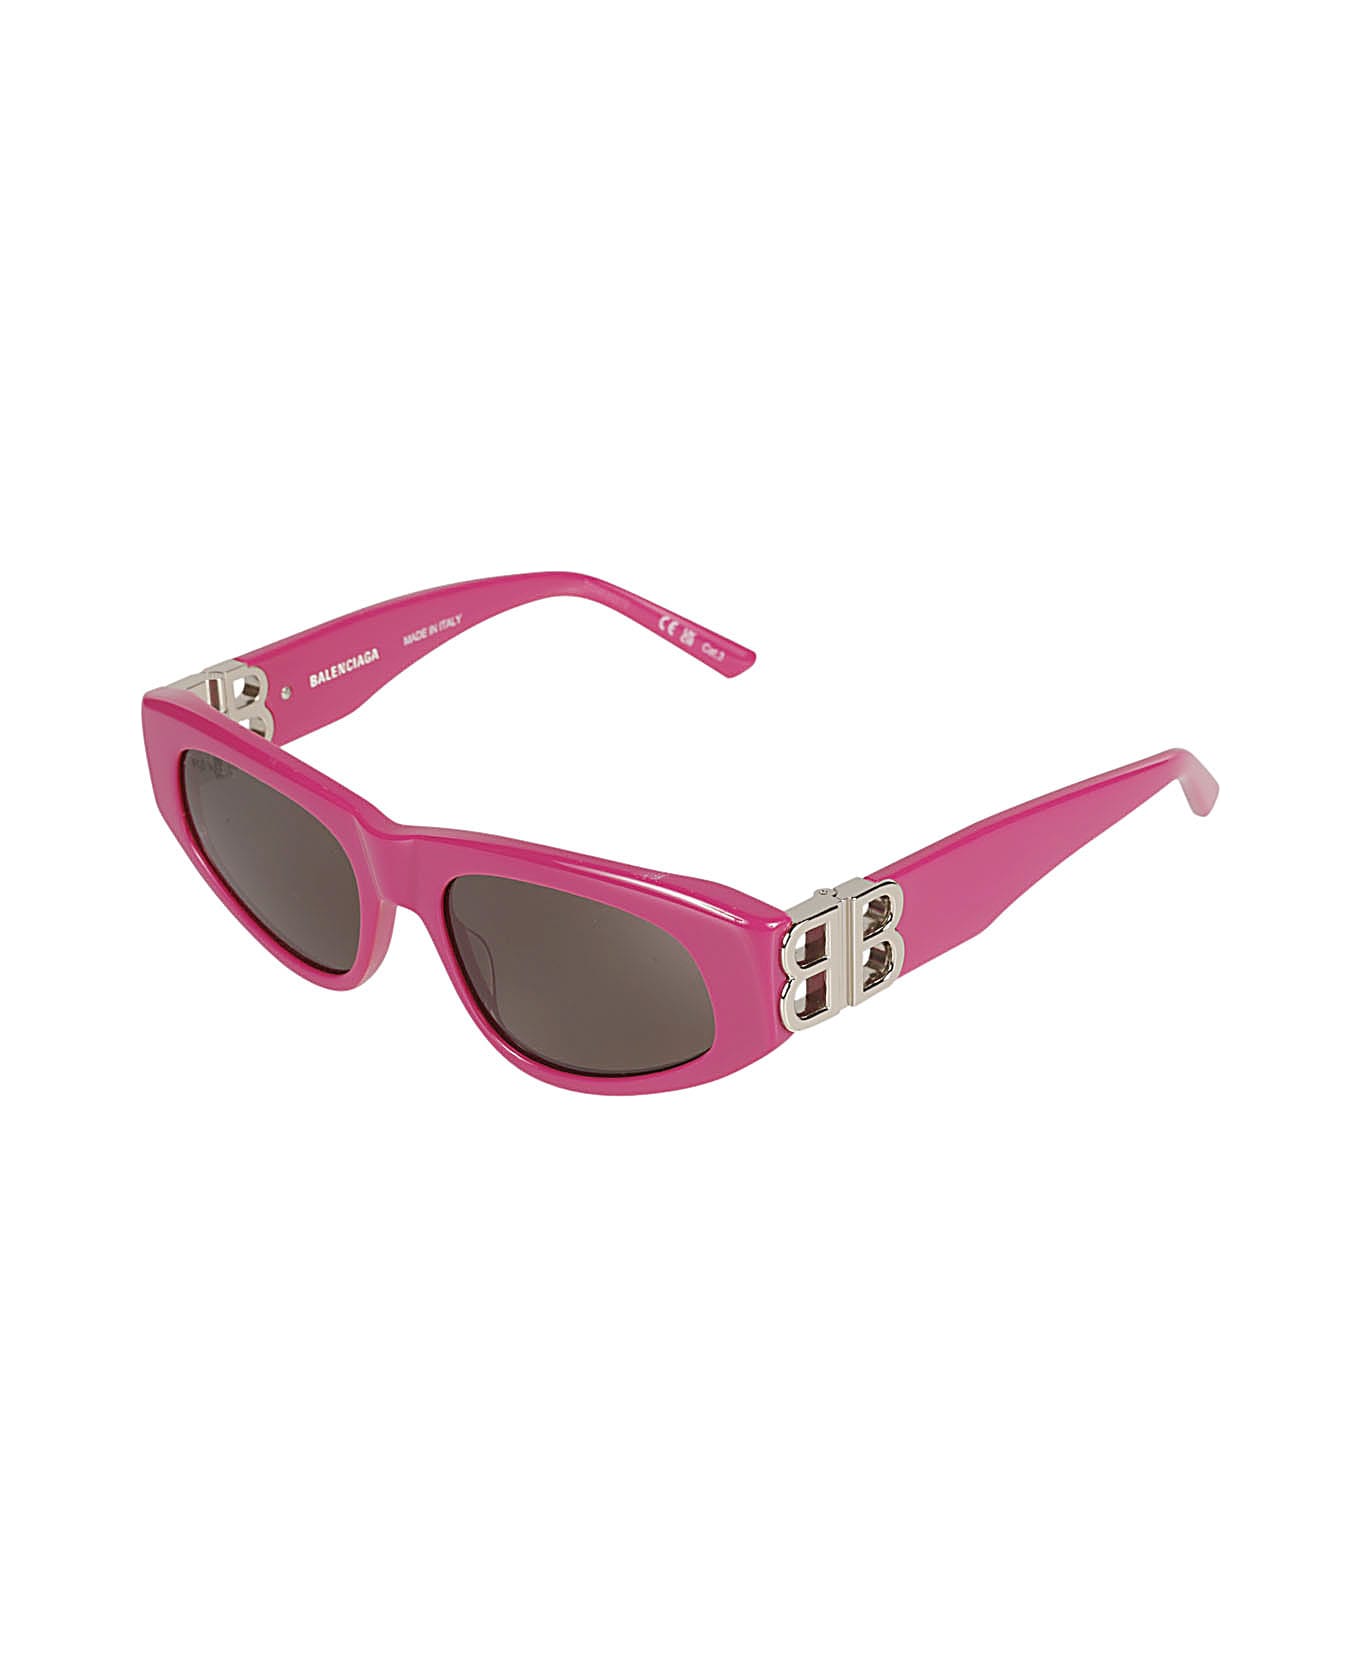 Balenciaga Eyewear Bb Hinge Logo Sided Sunglasses - Fuchsia/Silver/Grey サングラス